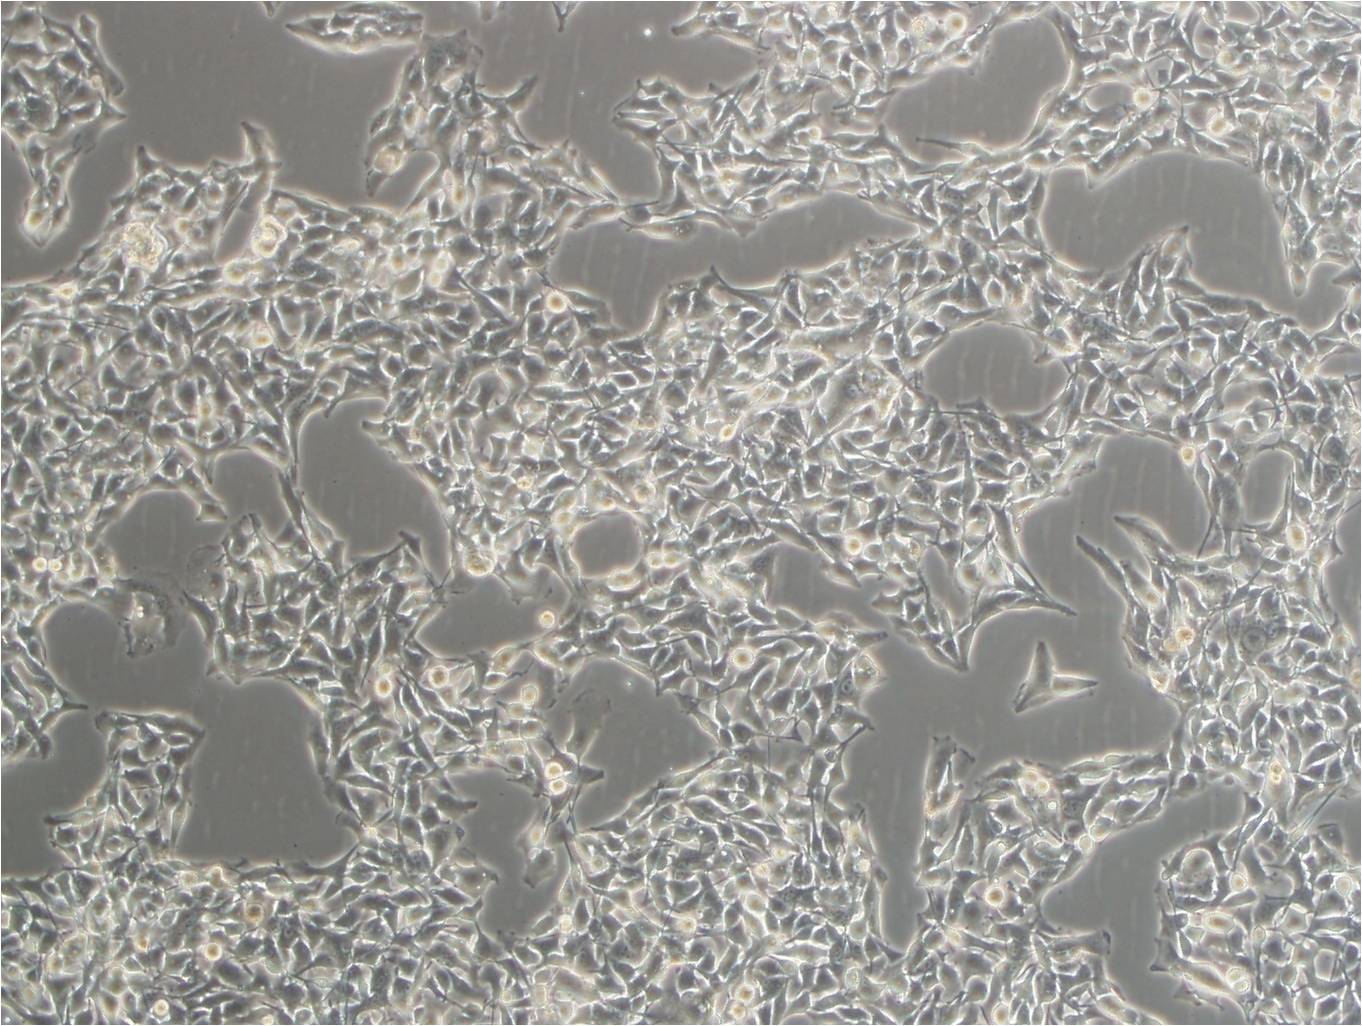 EU-4 Cells(赠送Str鉴定报告)|人急性髓系白血病细胞,EU-4 Cells